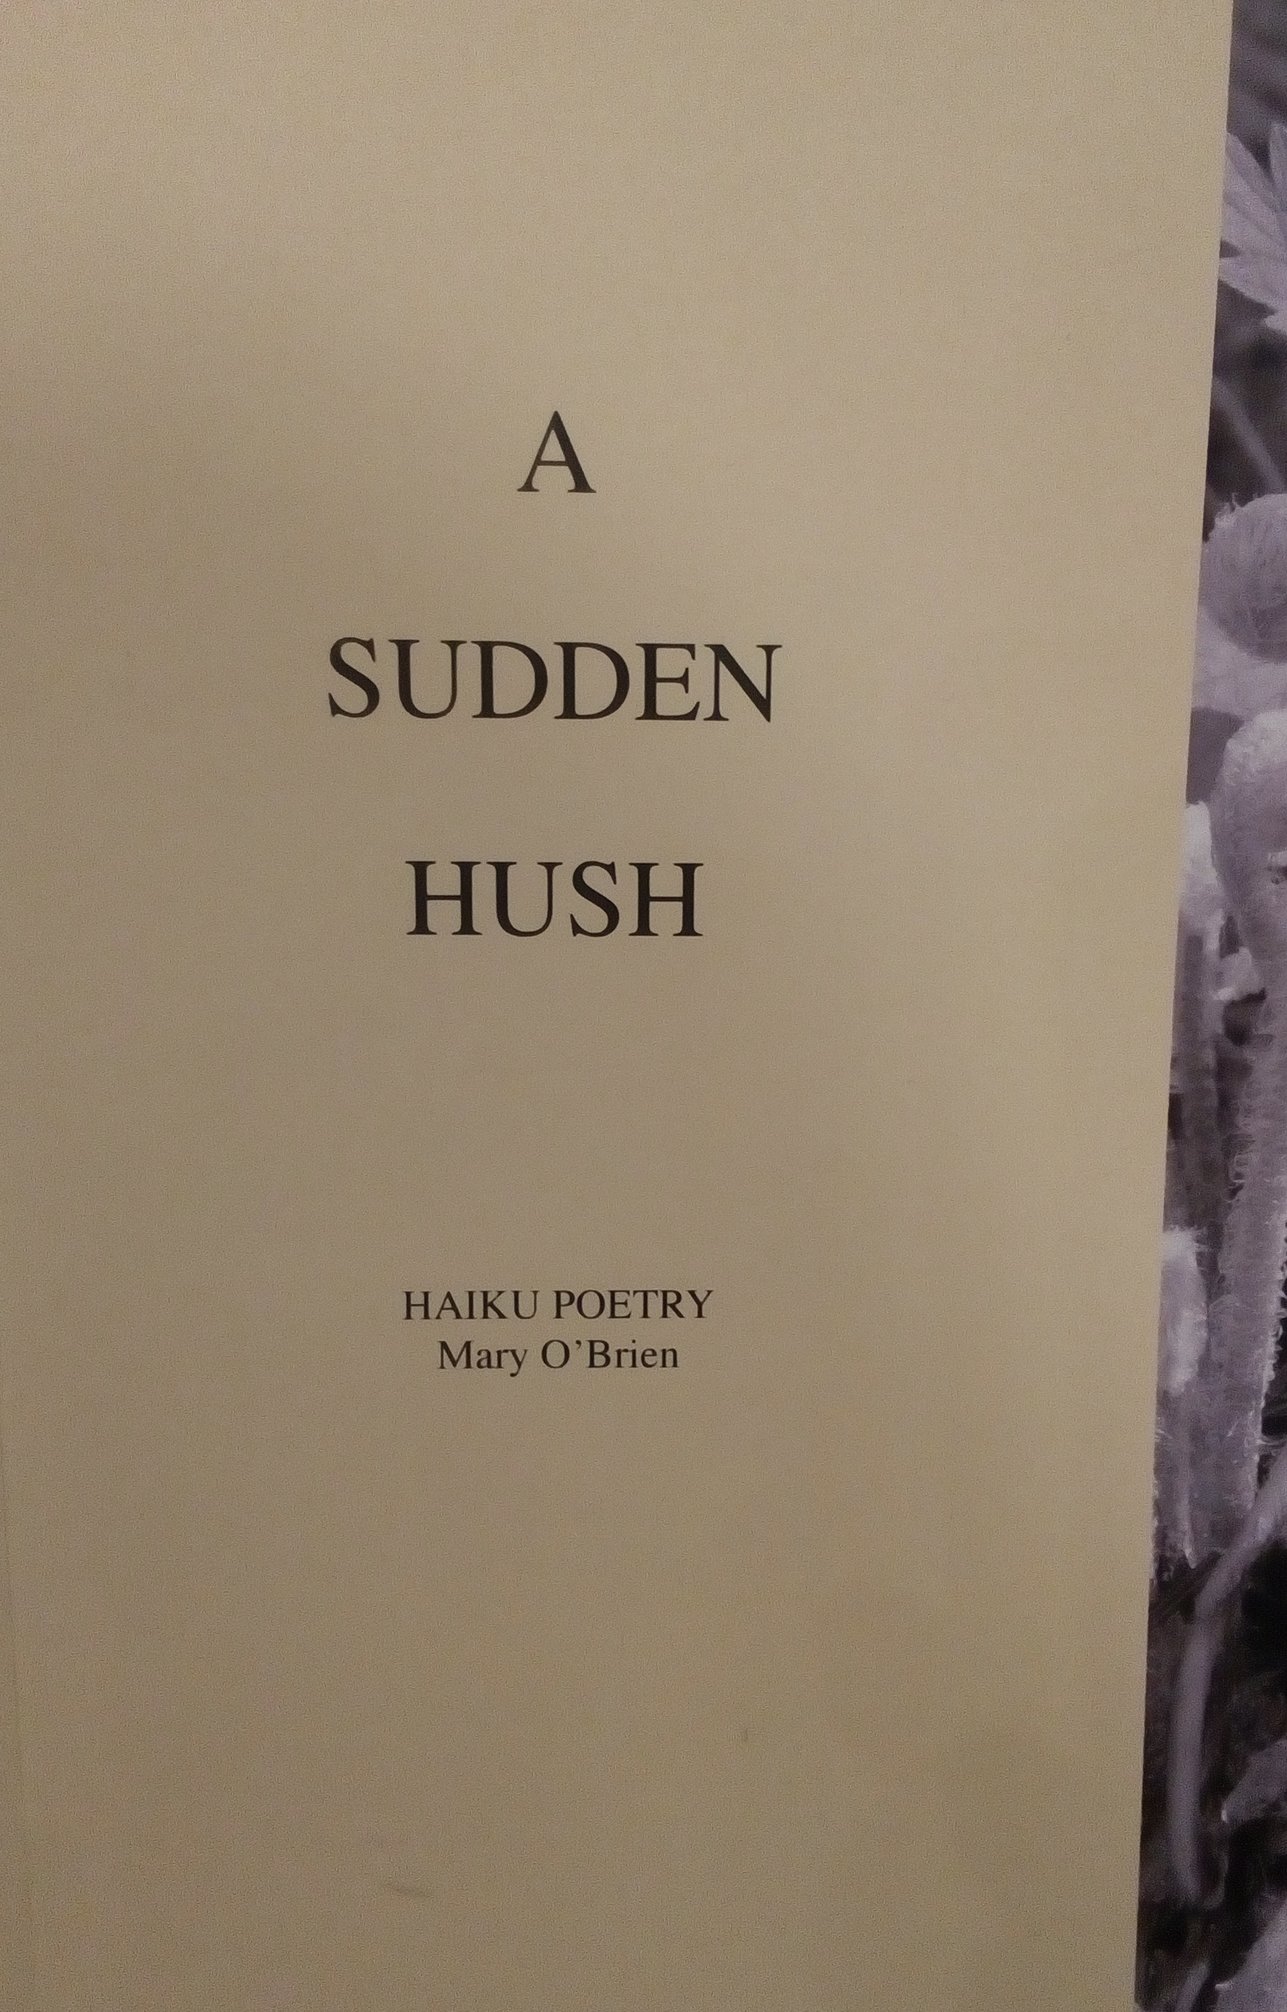 A Sudden Hush by Mary O'Brien